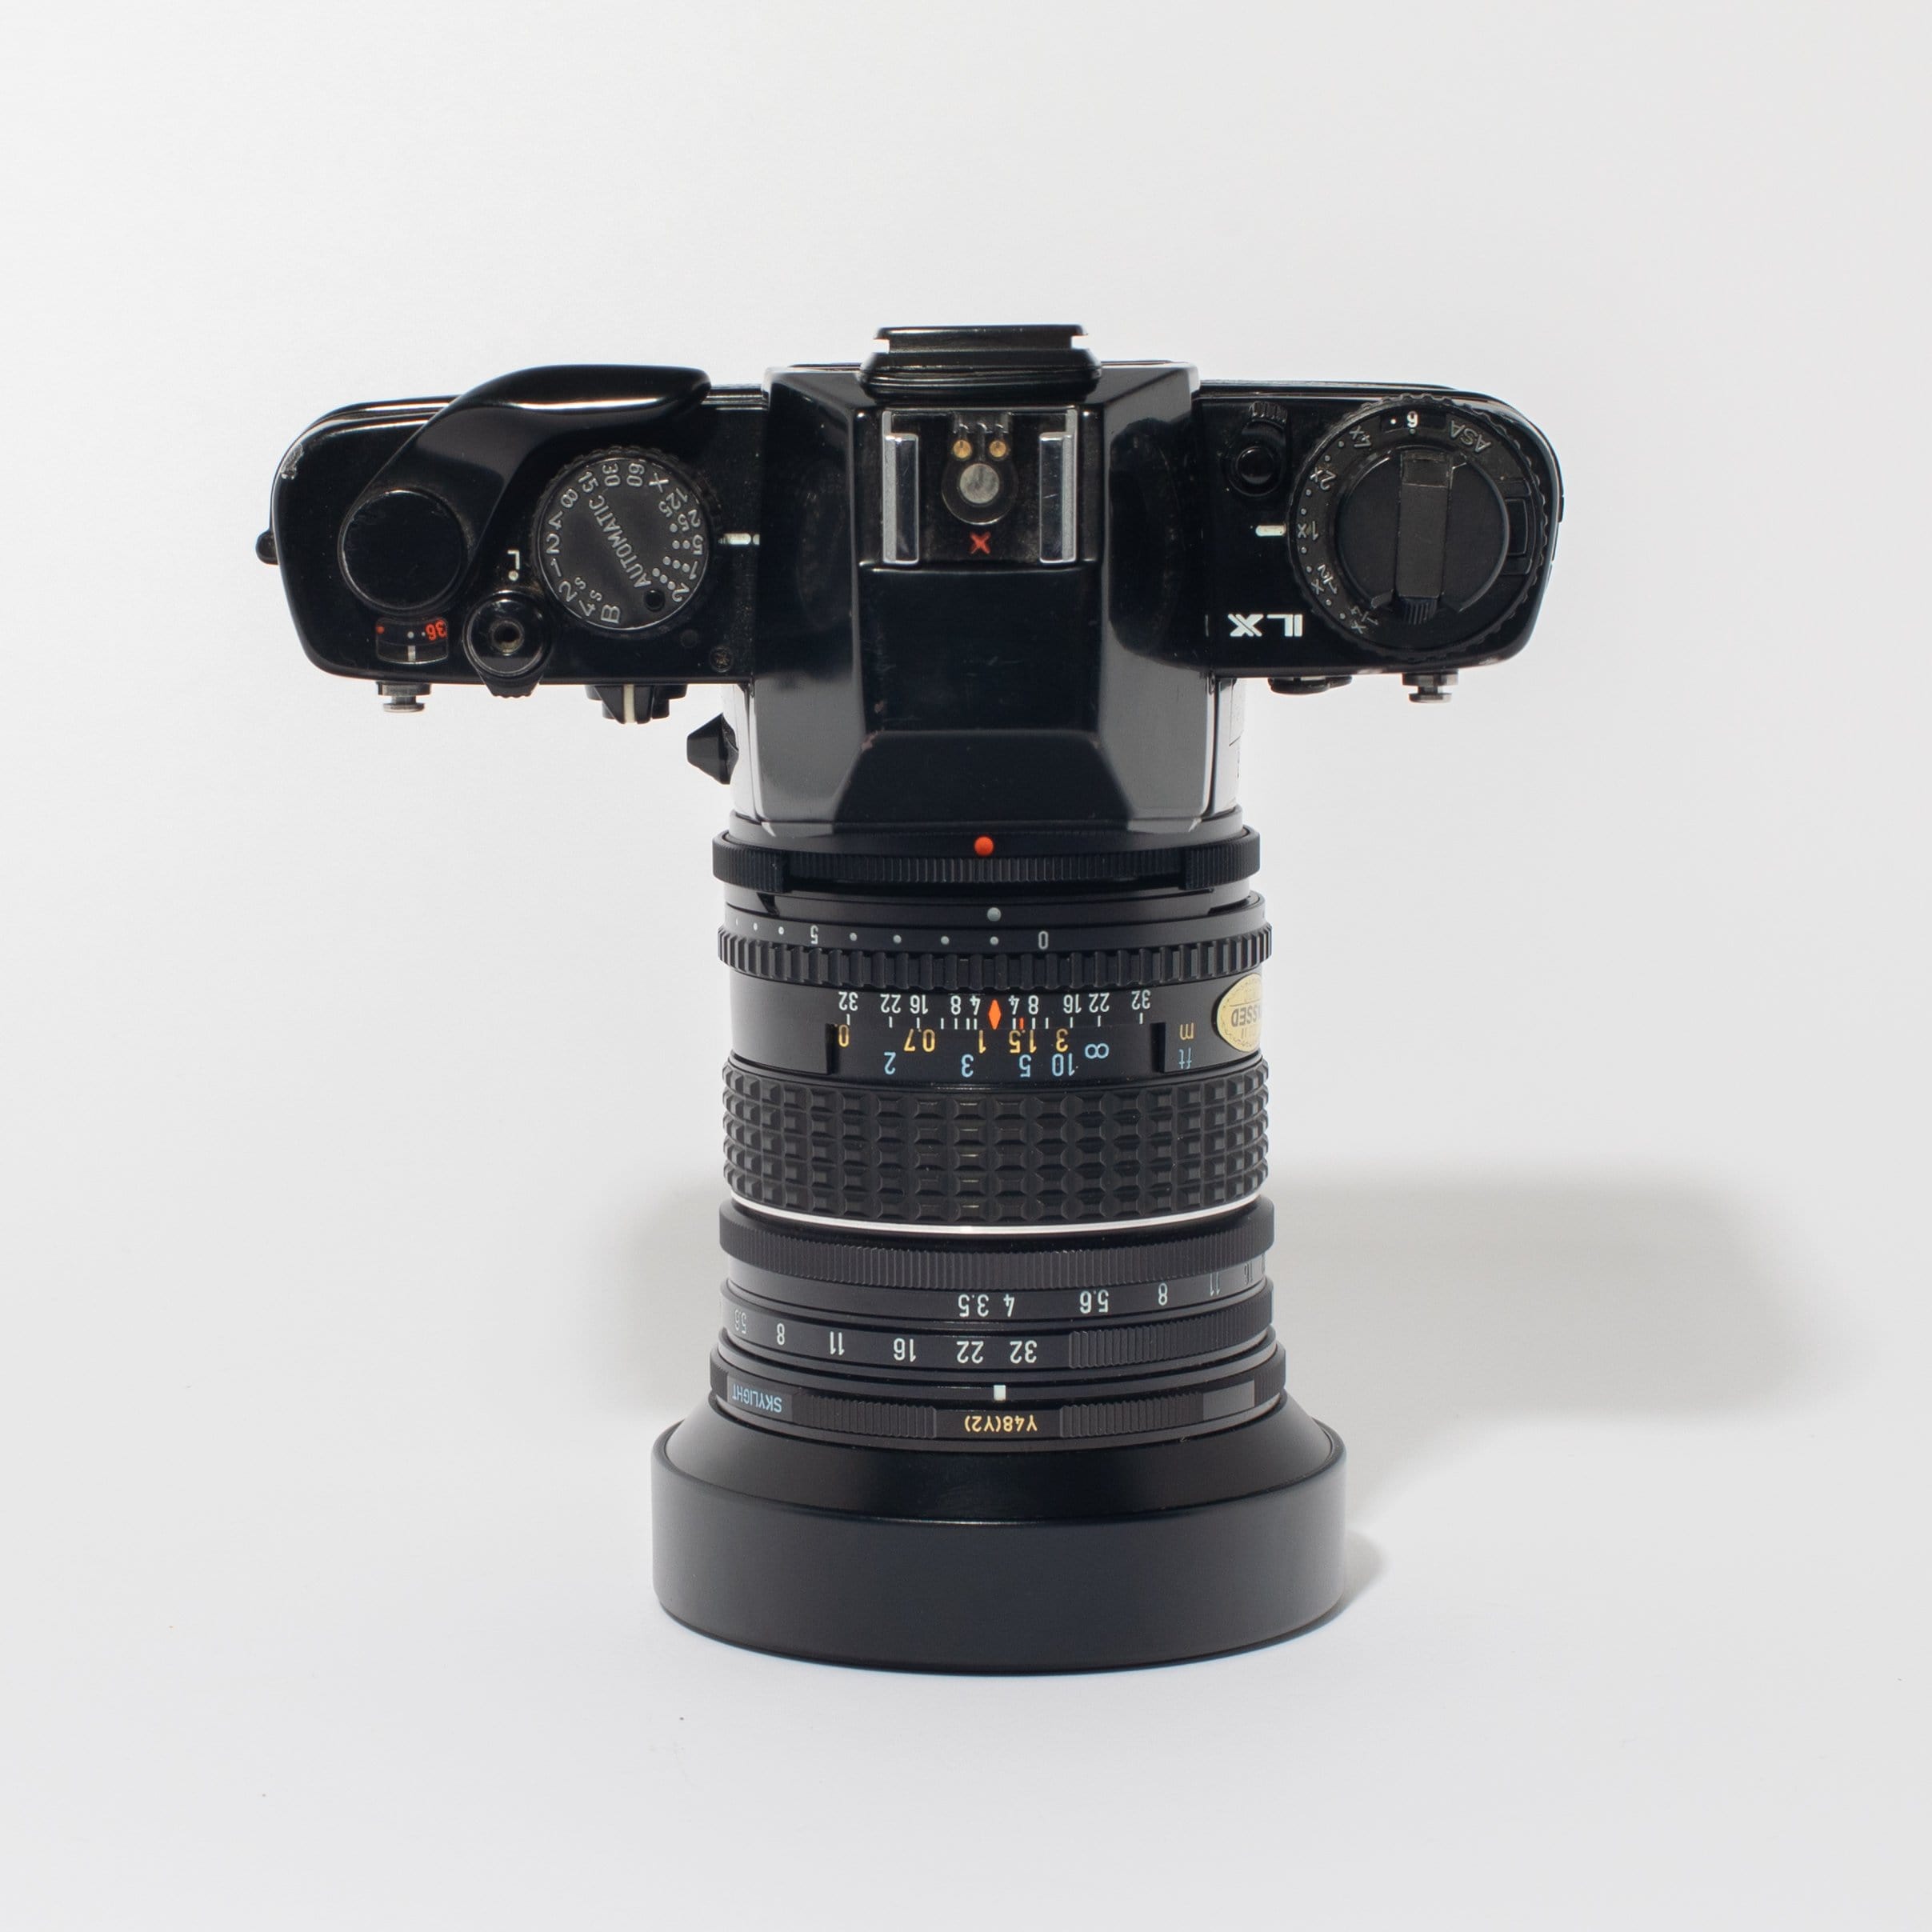 Pentax LX kit w/ 50mm 1.4 lens and 28mm 3.5 shift lens